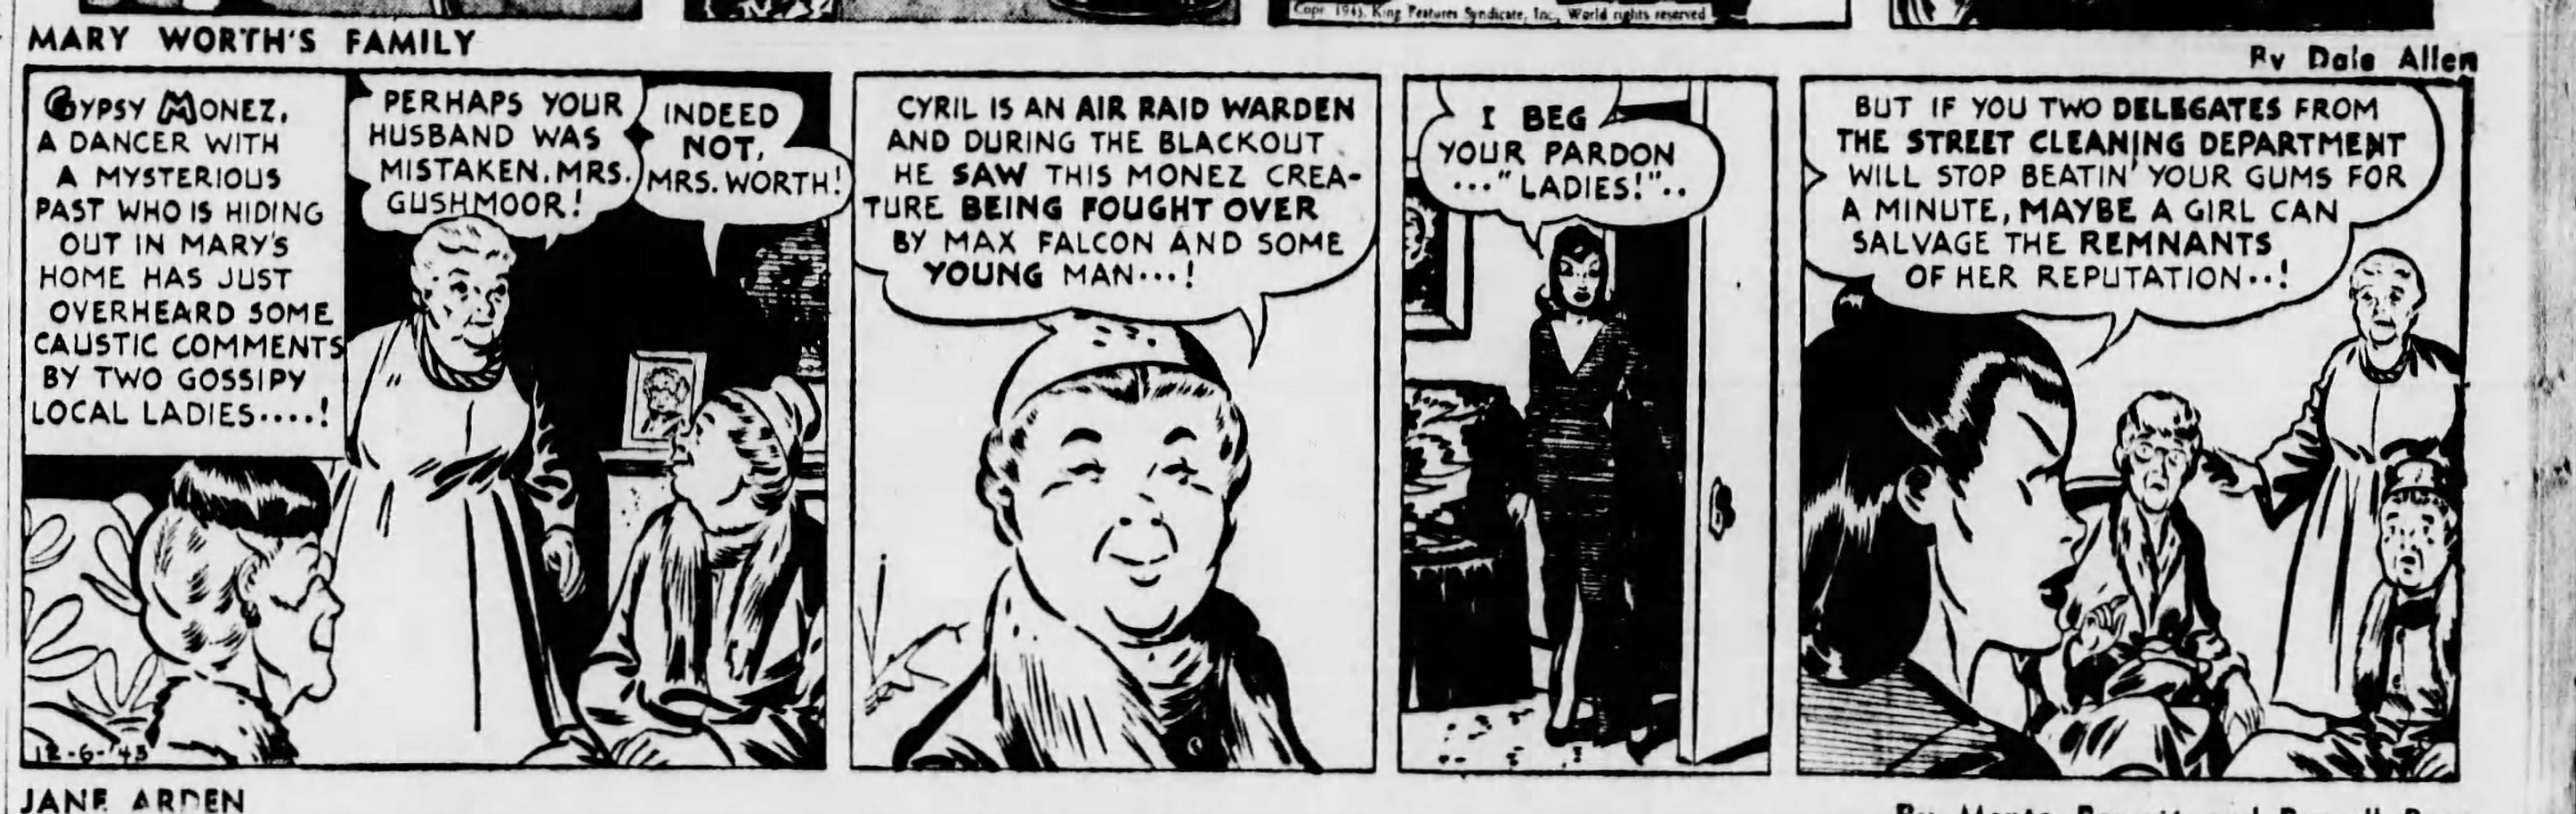 The_Brooklyn_Daily_Eagle_Mon__Dec_6__1943_(6).jpg